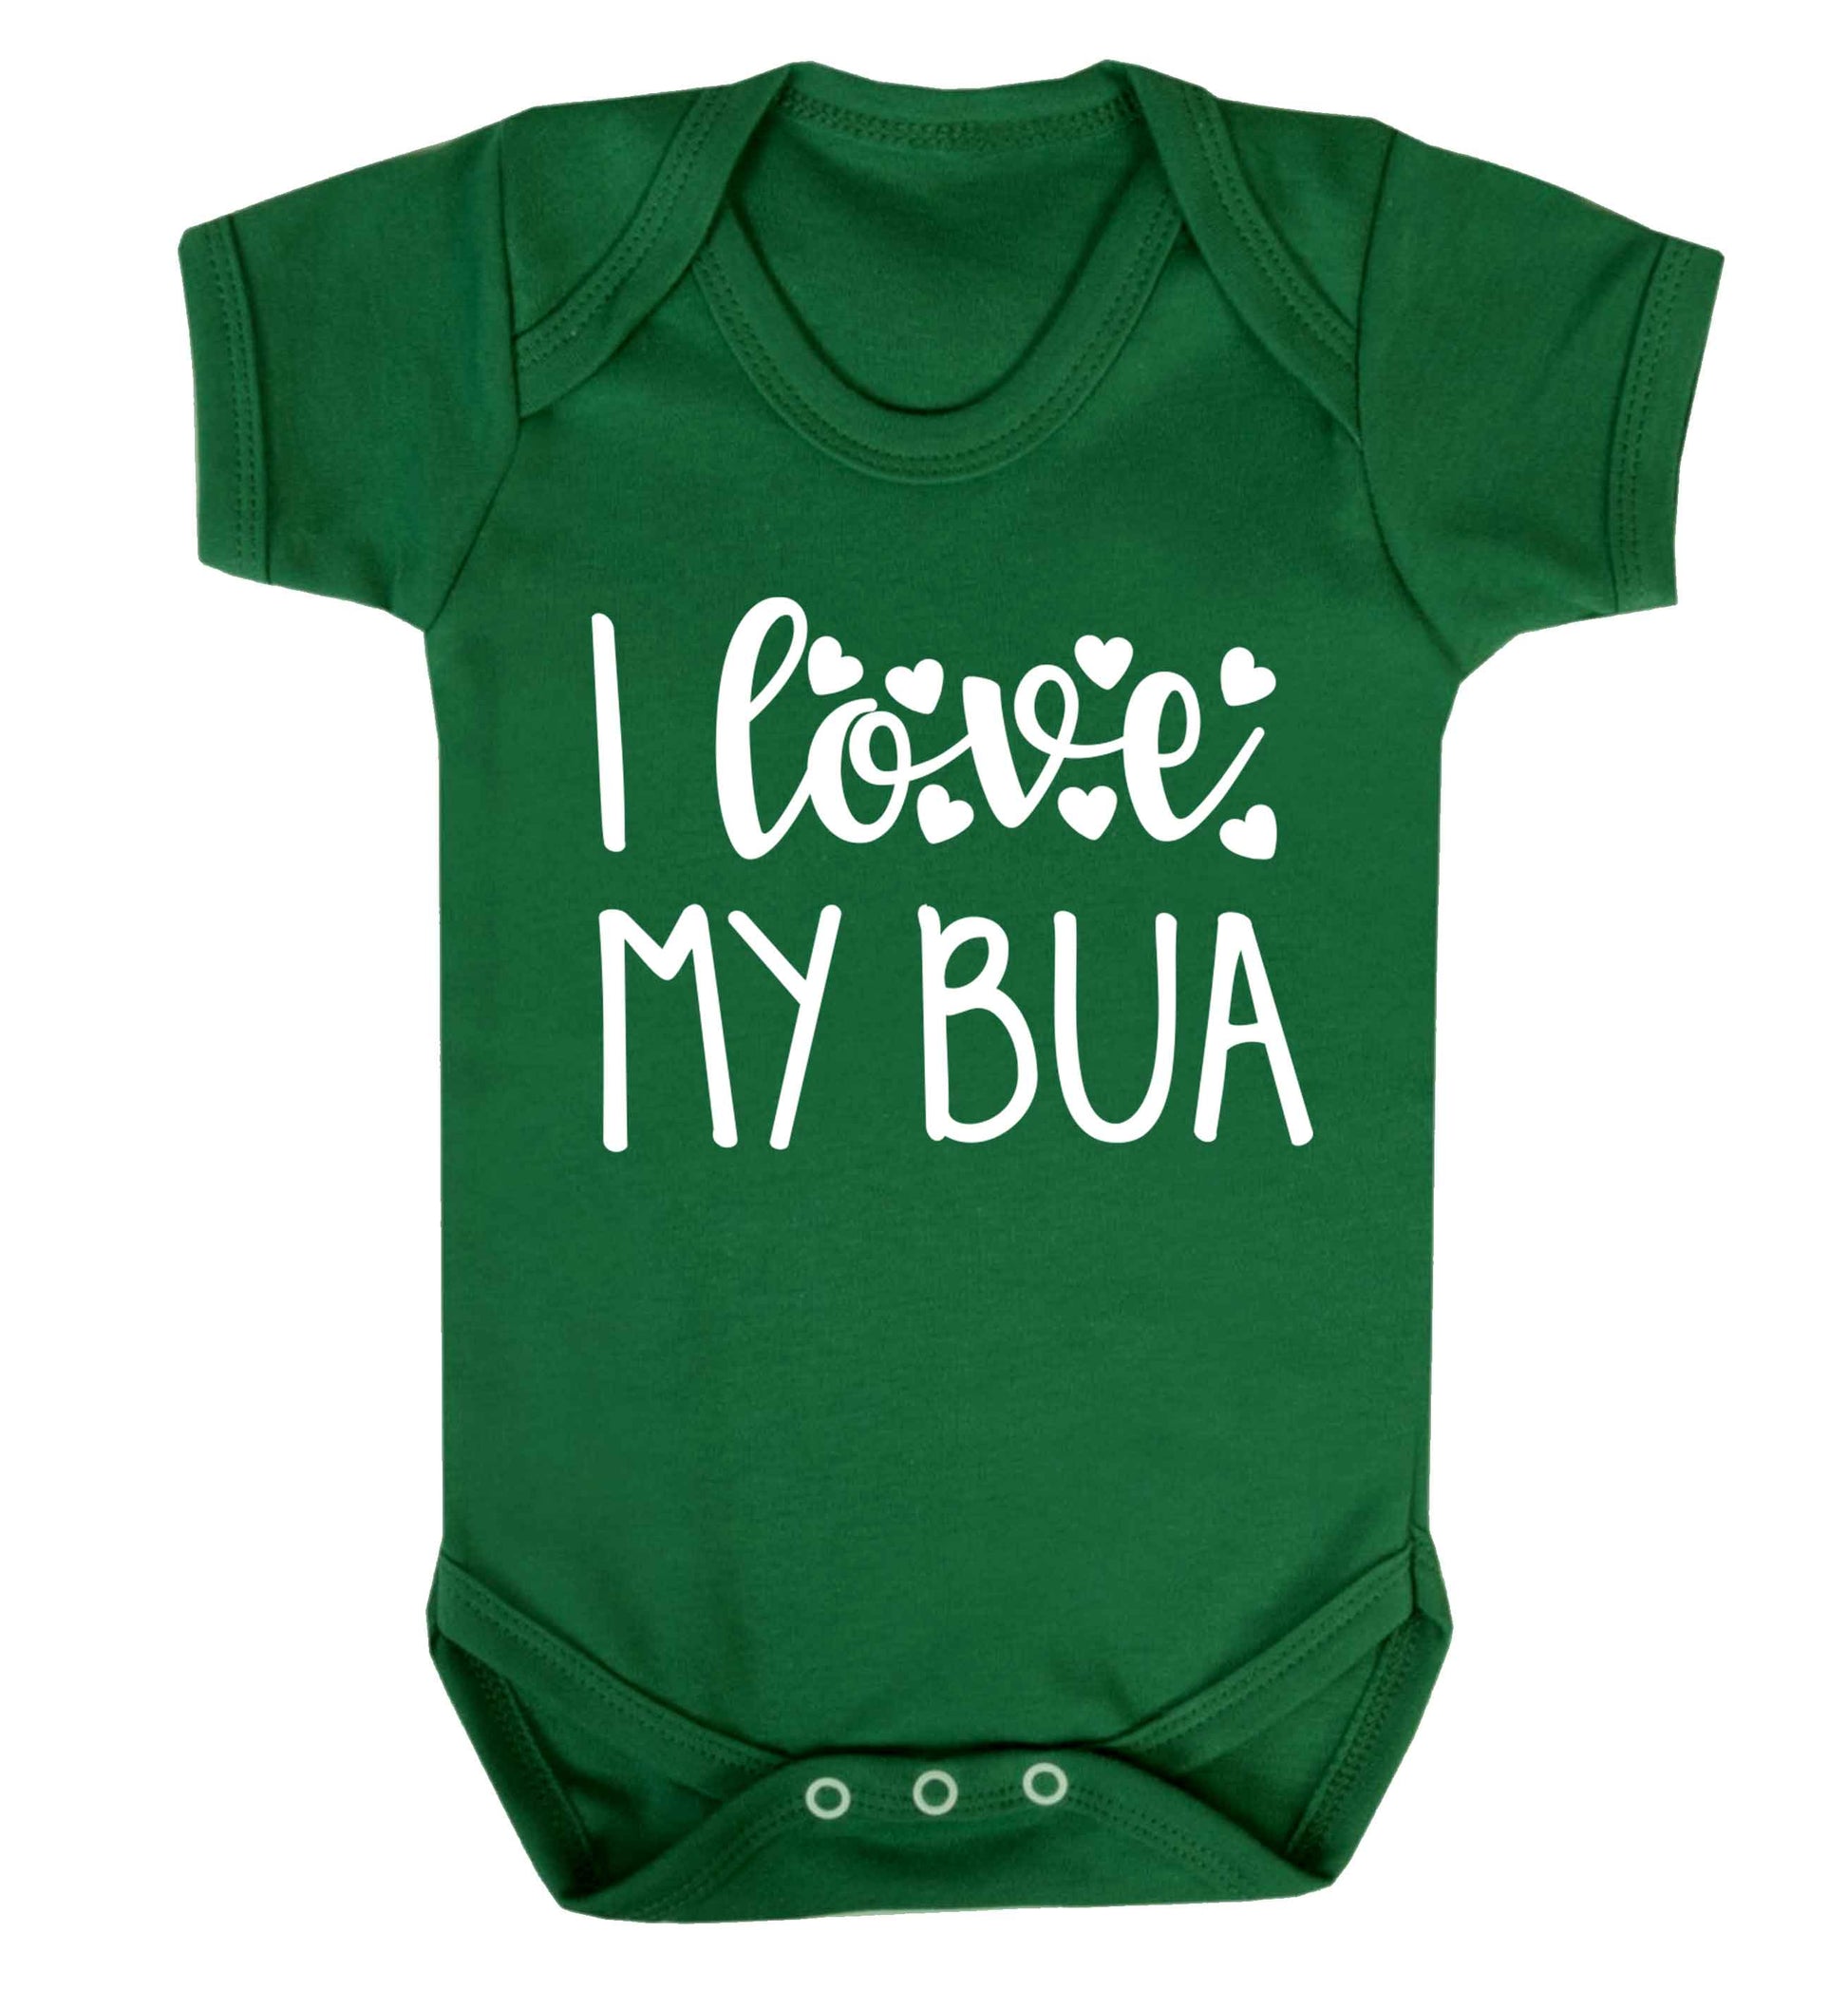 I love my bua Baby Vest green 18-24 months